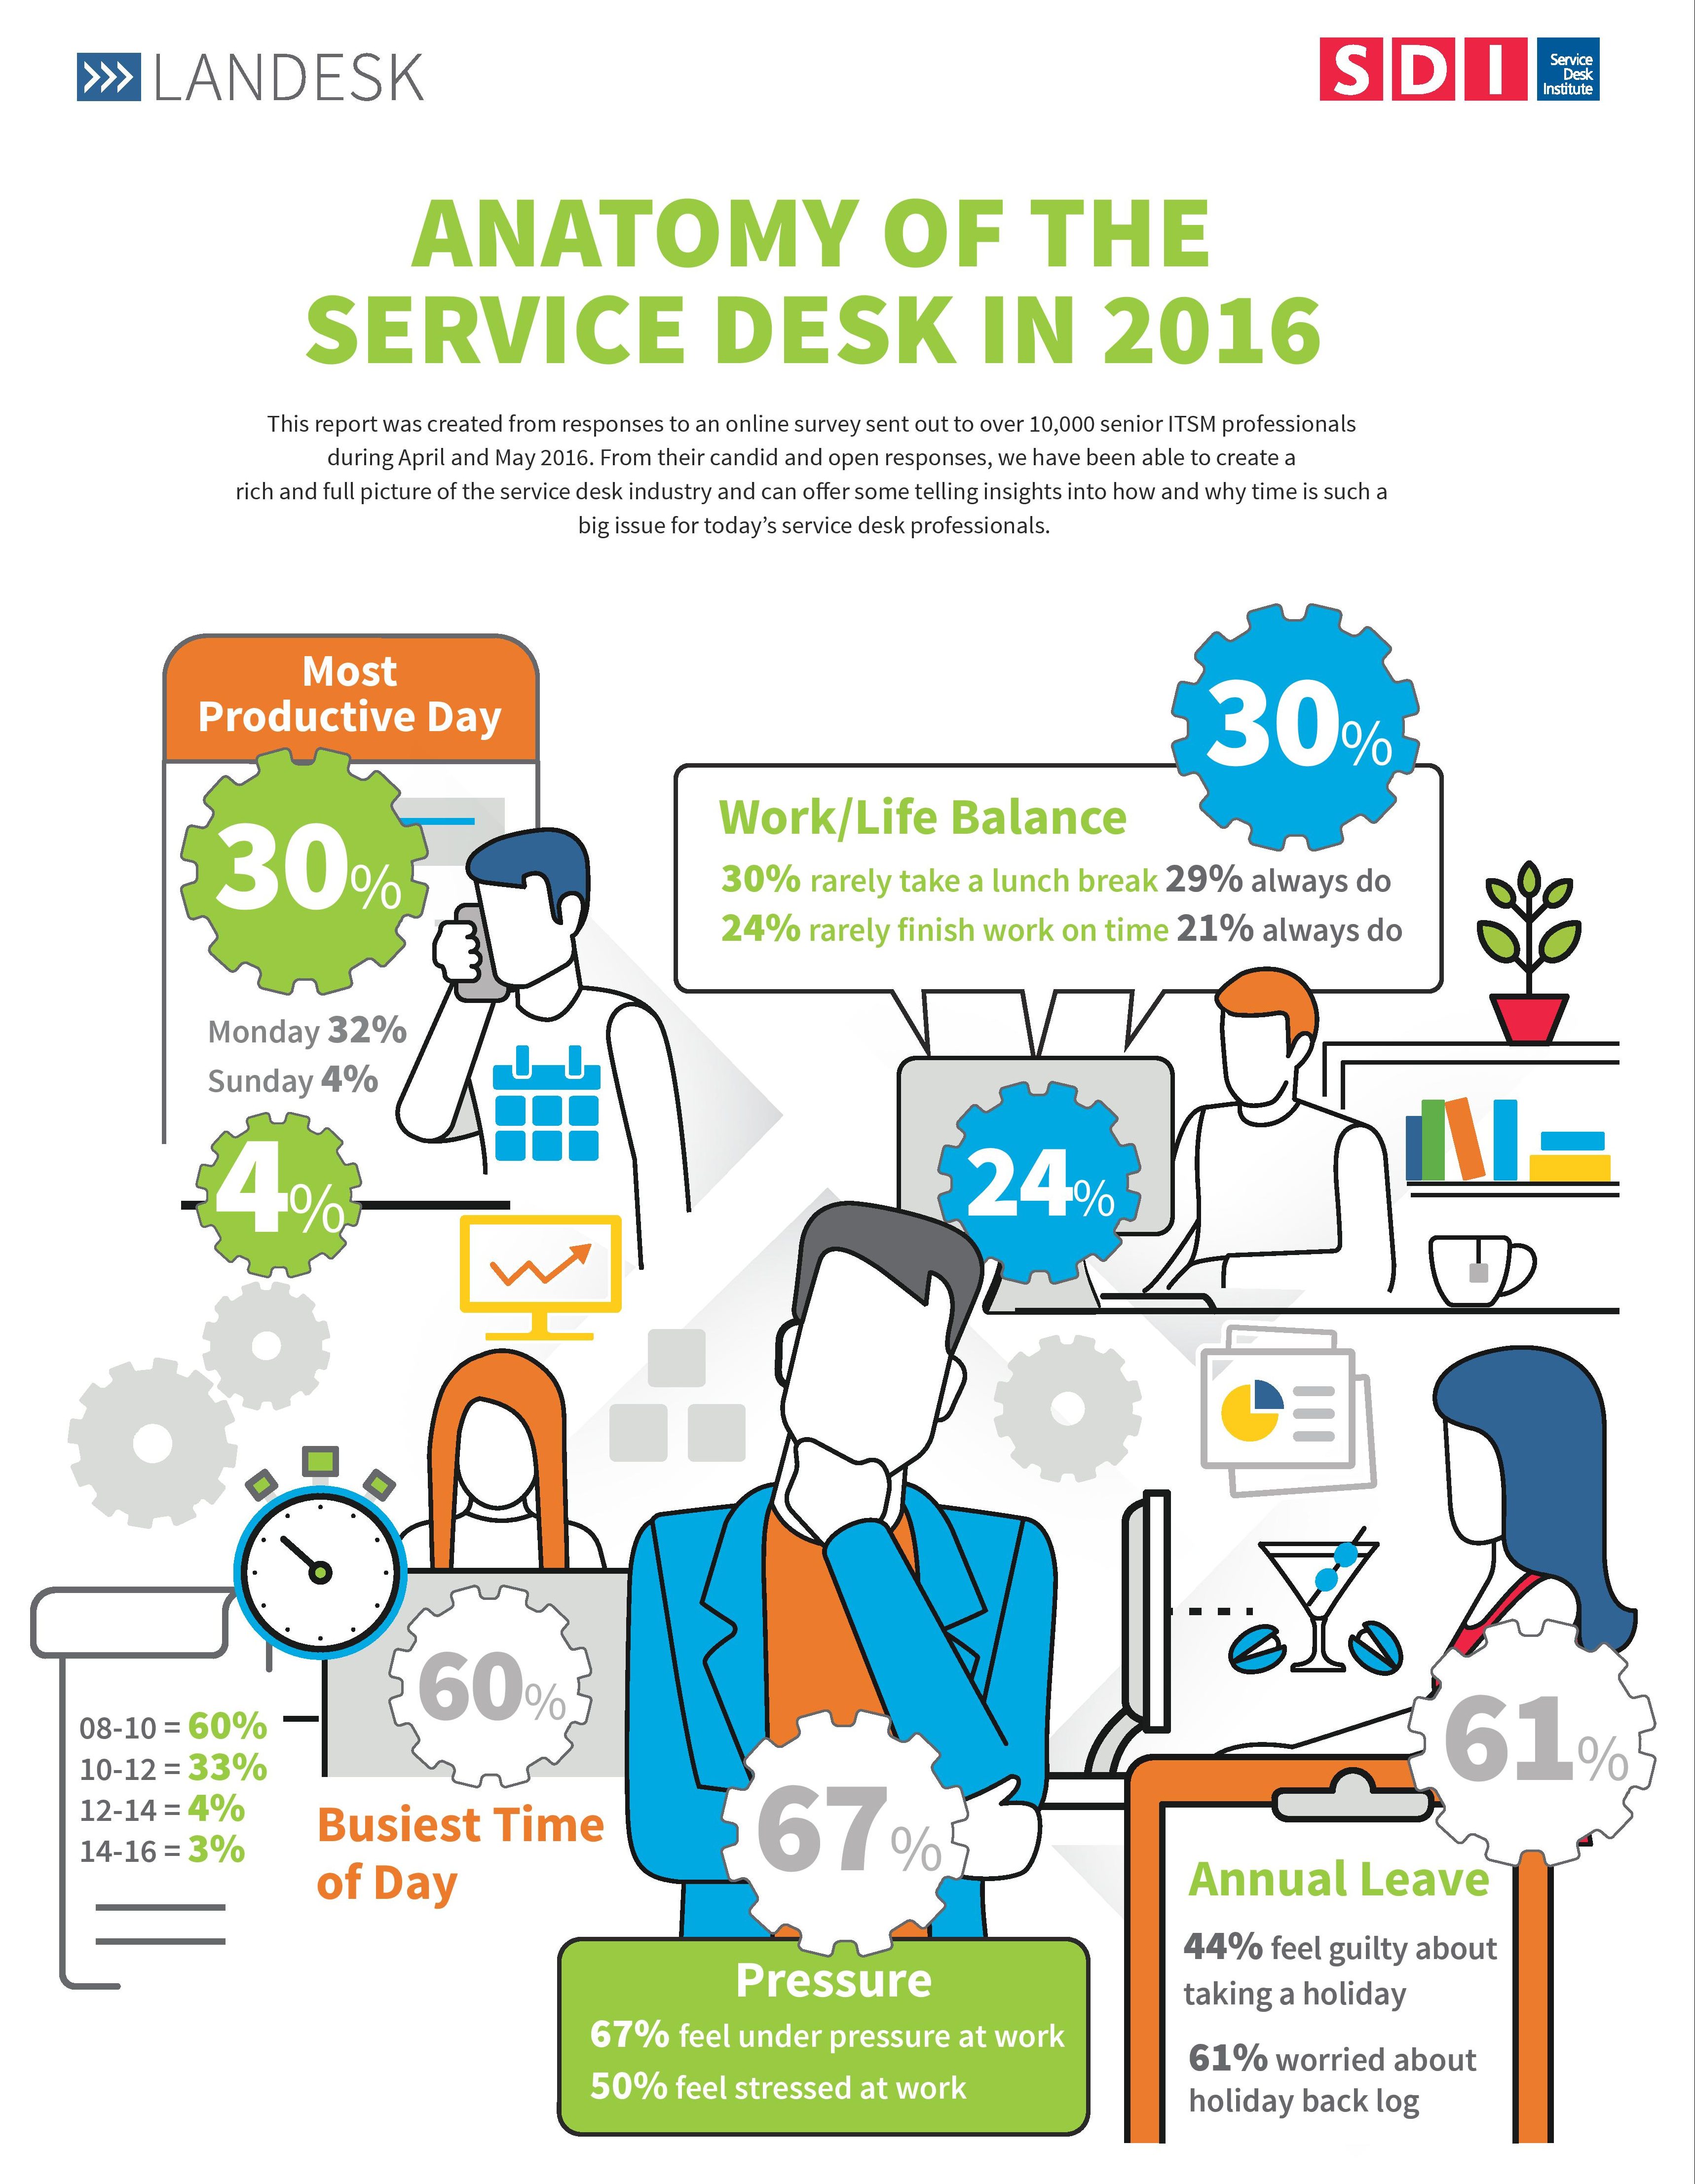 landesk SDI anatomy of the service desk in 2016 infographic